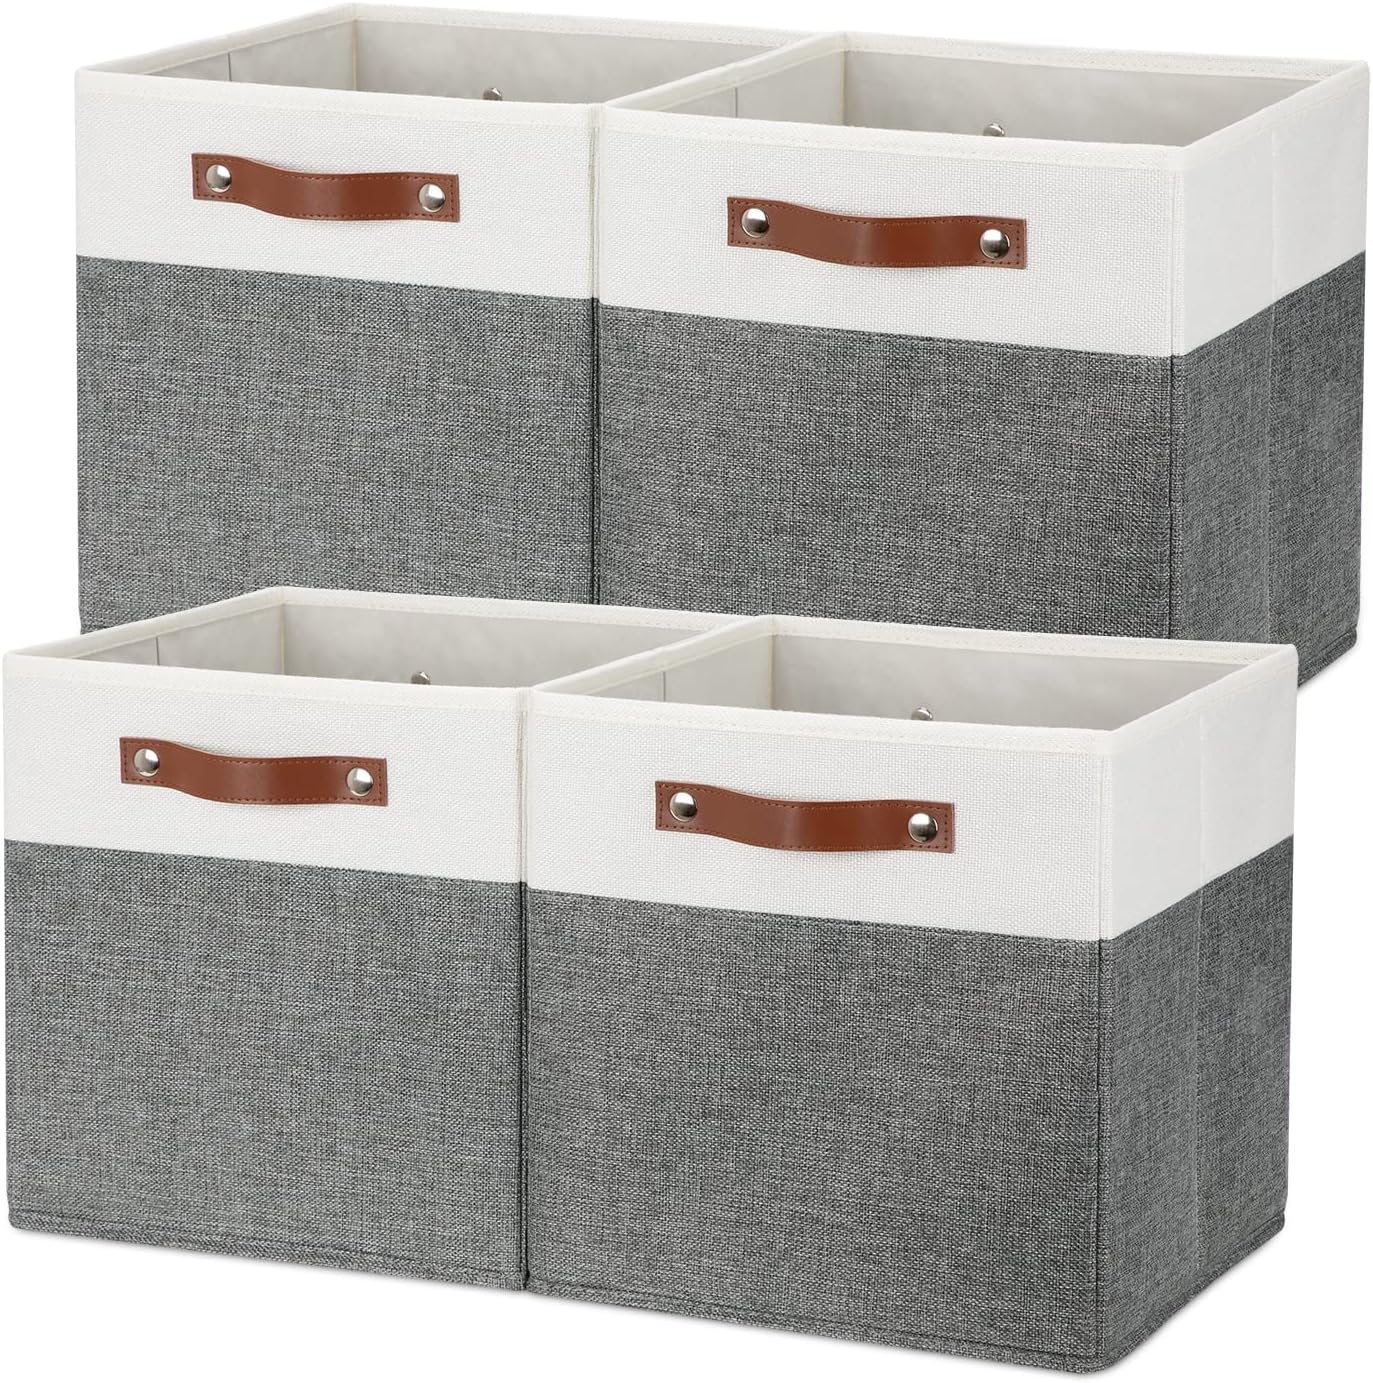 Temary Storage Cubes 1212 Fabric Cube Storage Bins Foldable Storage Baskets with Handles, Decorative Storage Boxes for Organizing, Home, Office, Nursery, Shelf, Closet (White & Grey, 12 x 12 x 12)